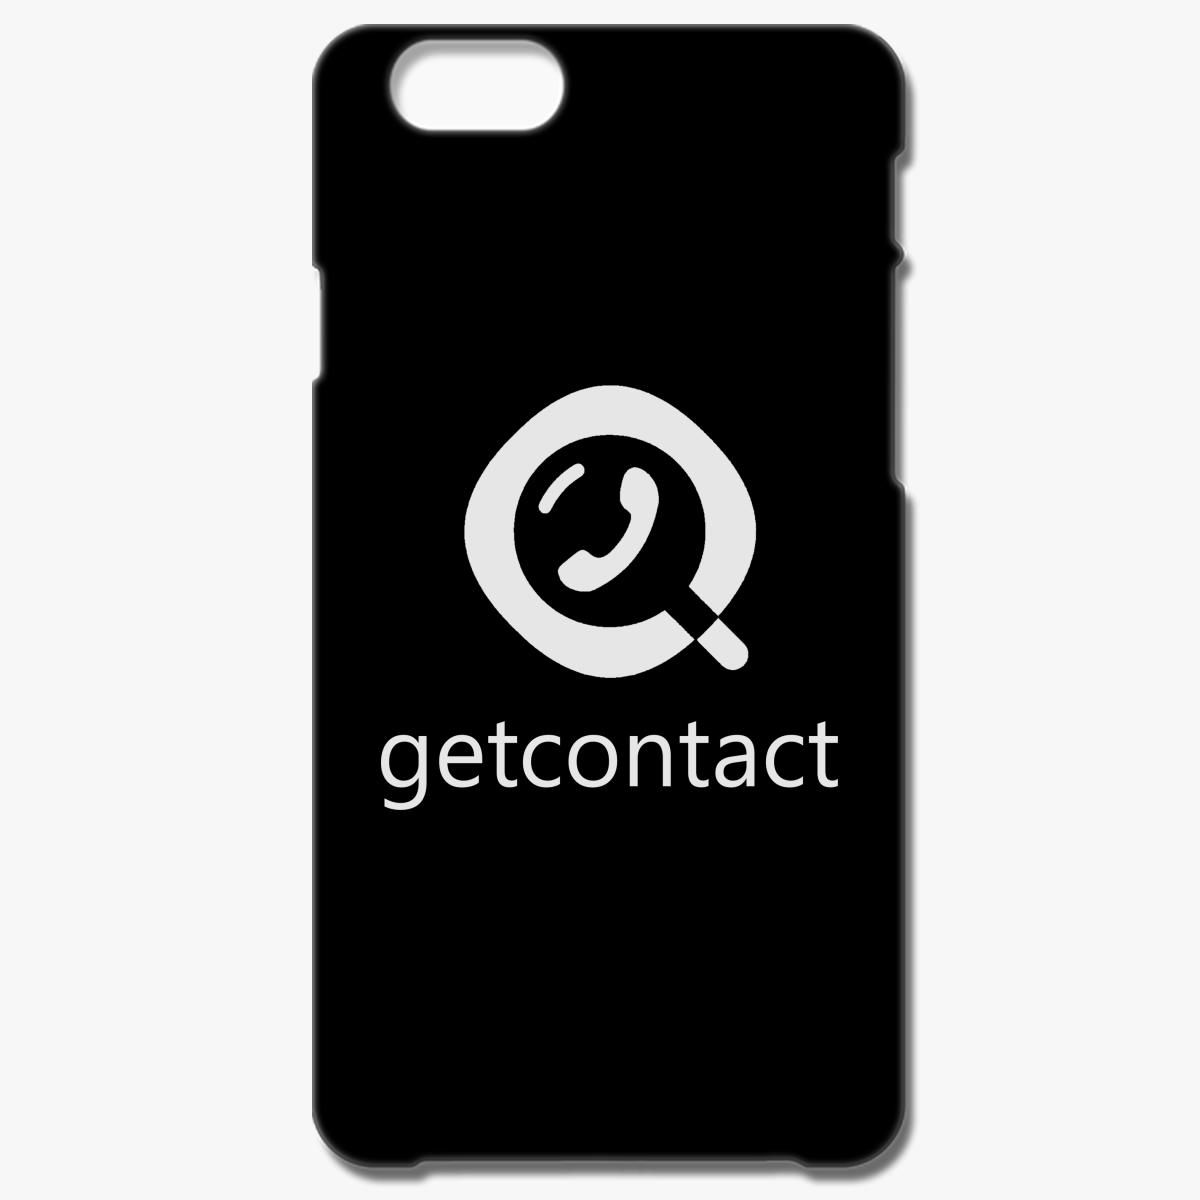 getcontact logo iPhone 8 Plus Case - Customon